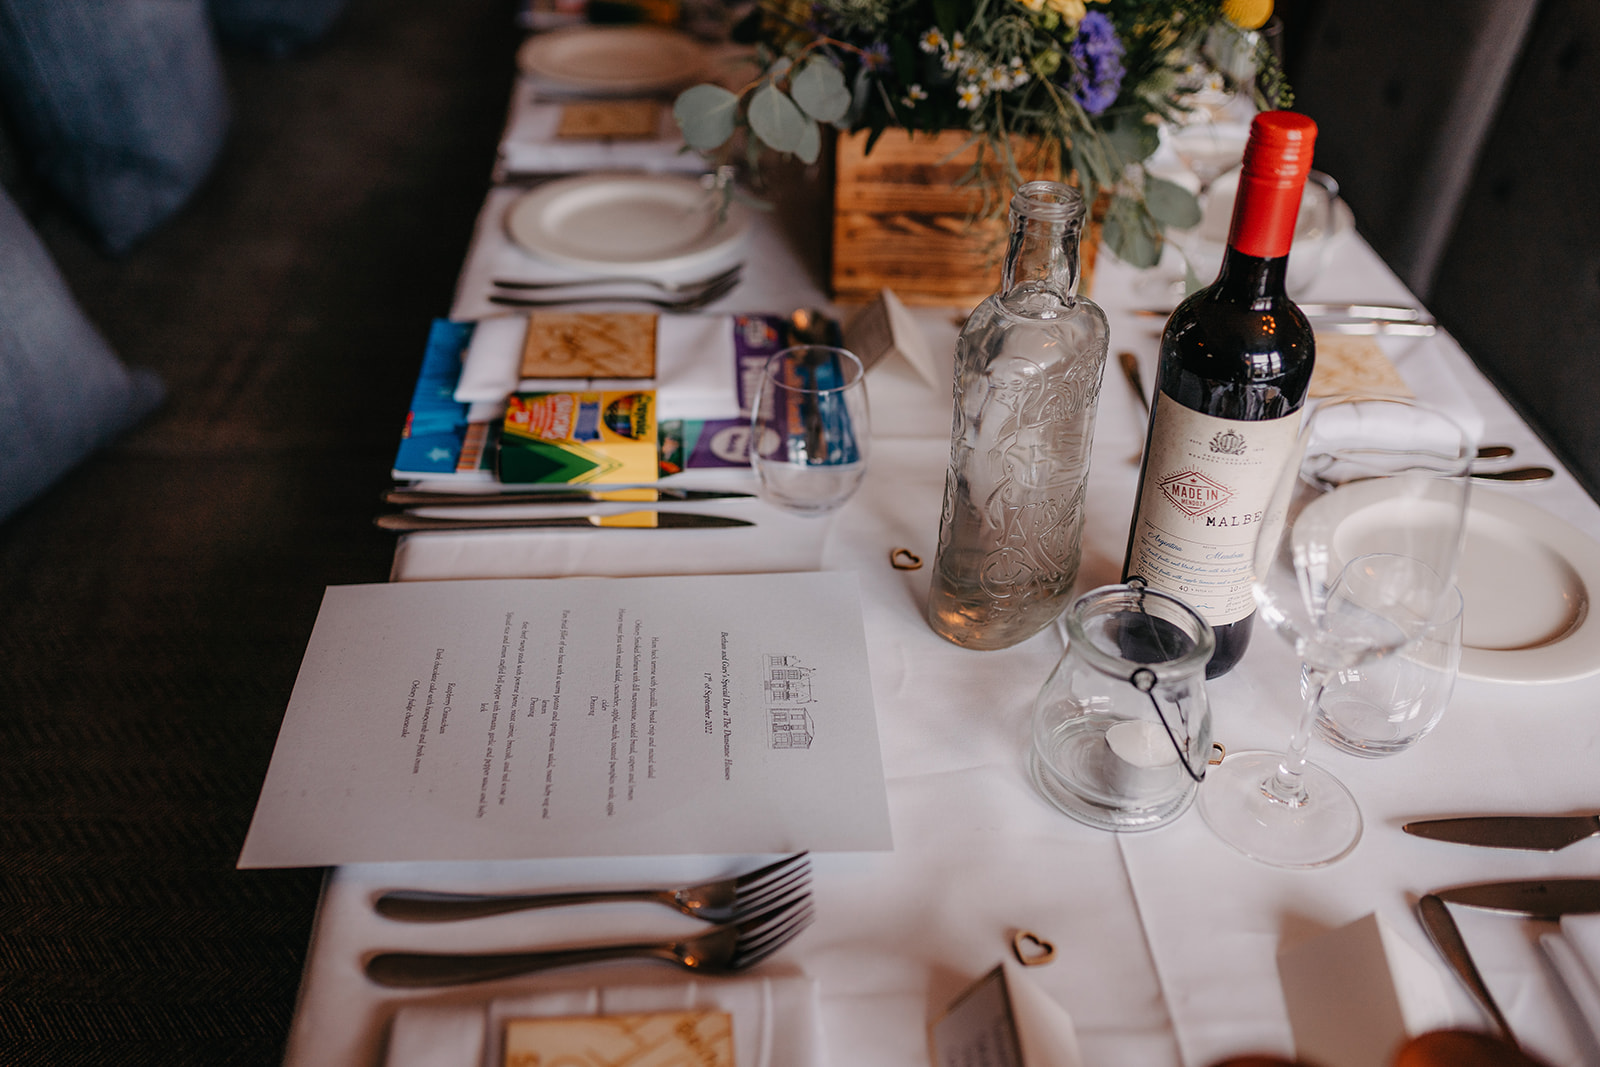 wine and menus on tables